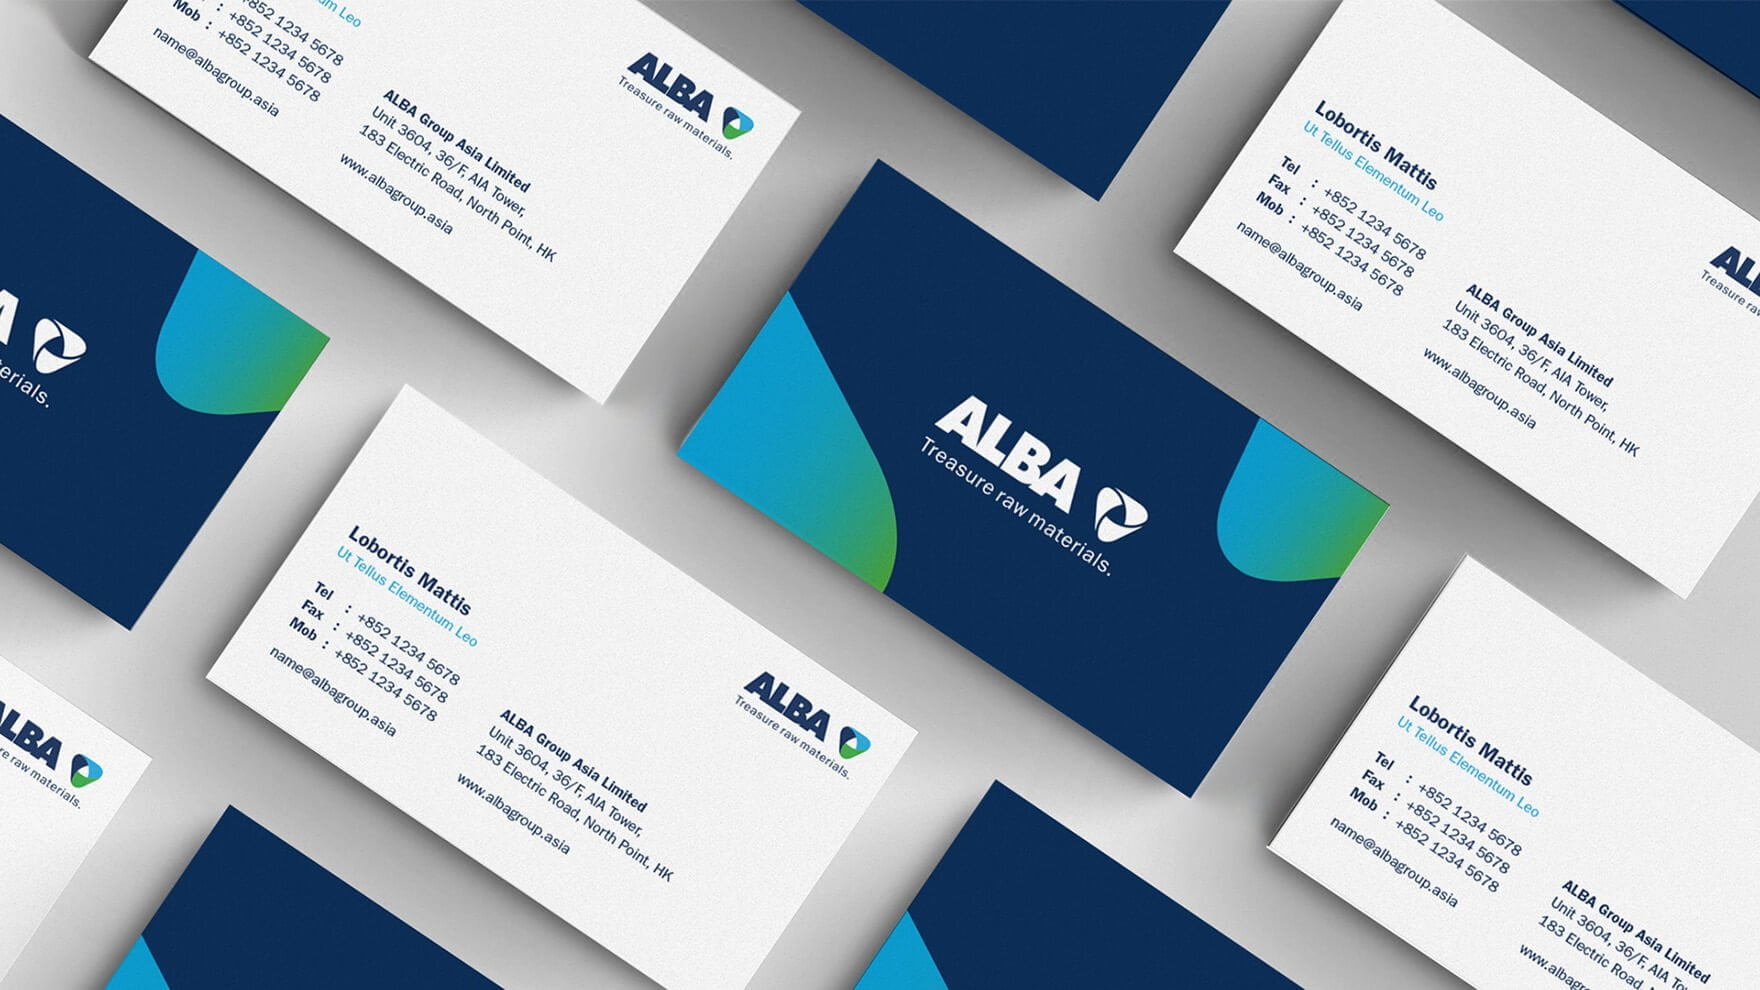 Branding Agency Hong Kong_ALBAGroupAsia_Corporate Identity Design_CheddarMedia_3_1760